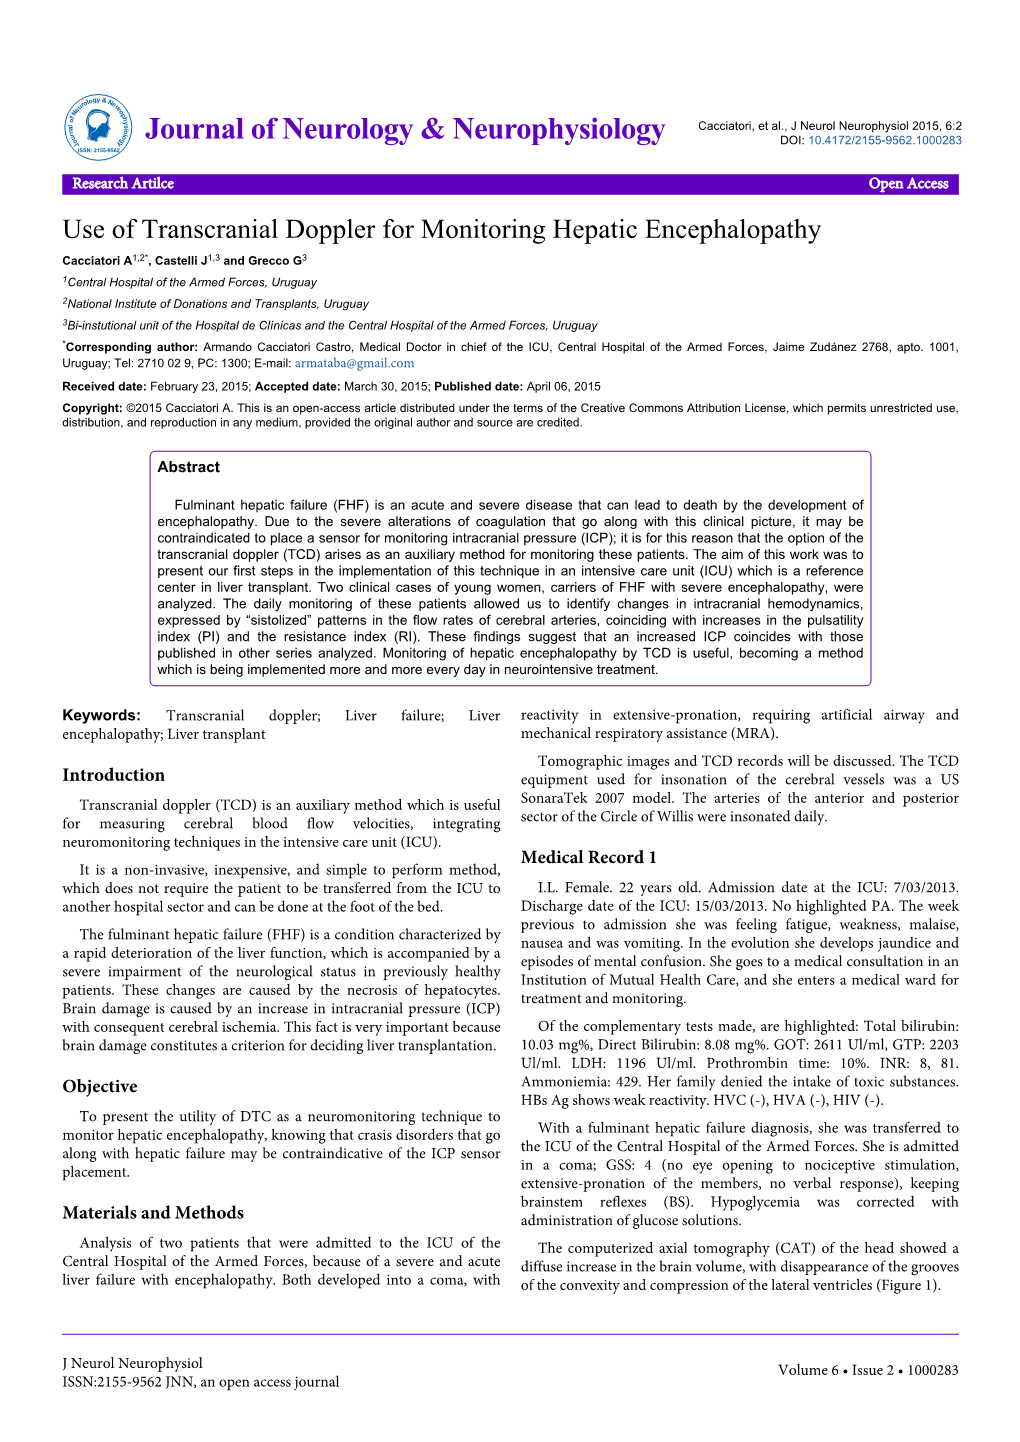 Use of Transcranial Doppler for Monitoring Hepatic Encephalopathy